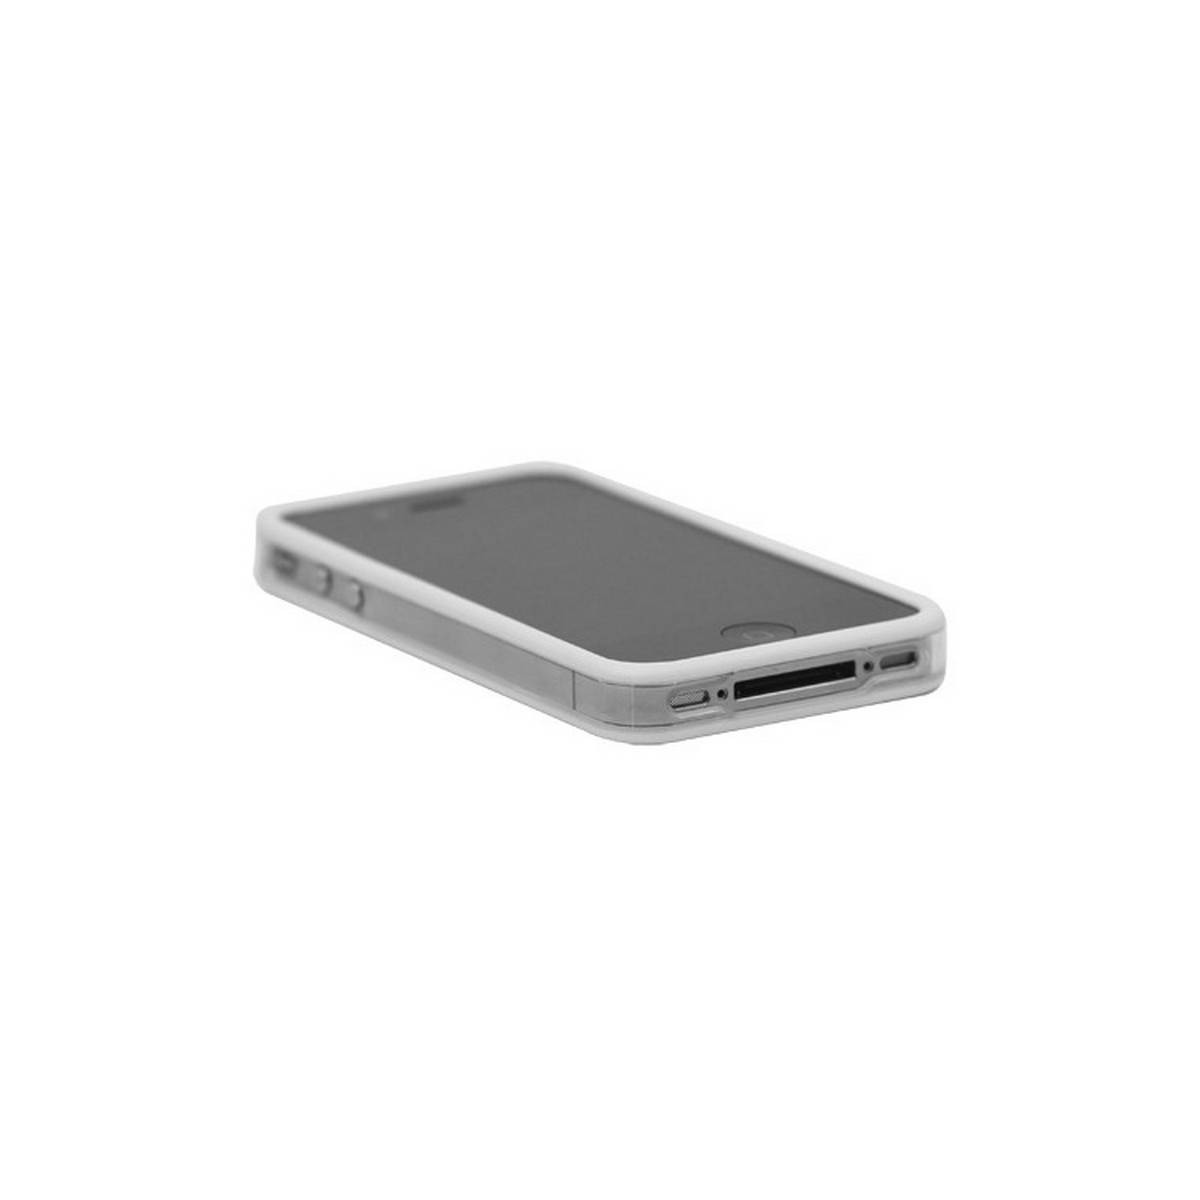 Bumper iphone 4/S blanco con transparente